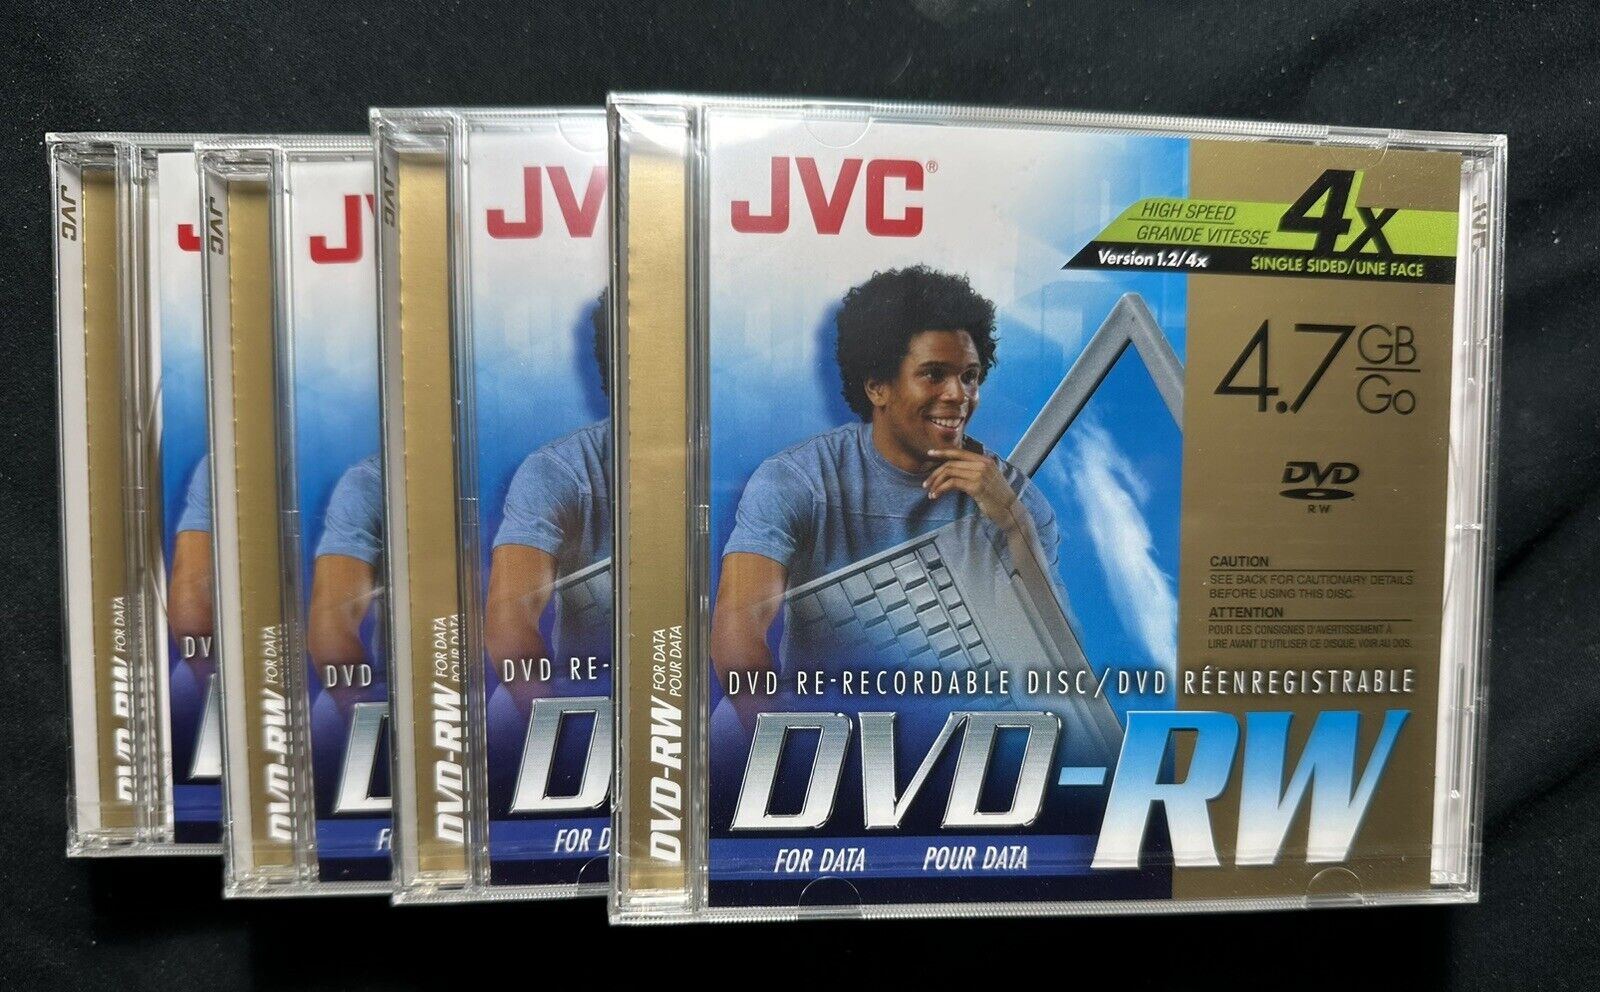 Brand New JVC DVD-RW 4-Pack High Speed 4X 4.7GB Data Disks - Factory Sealed